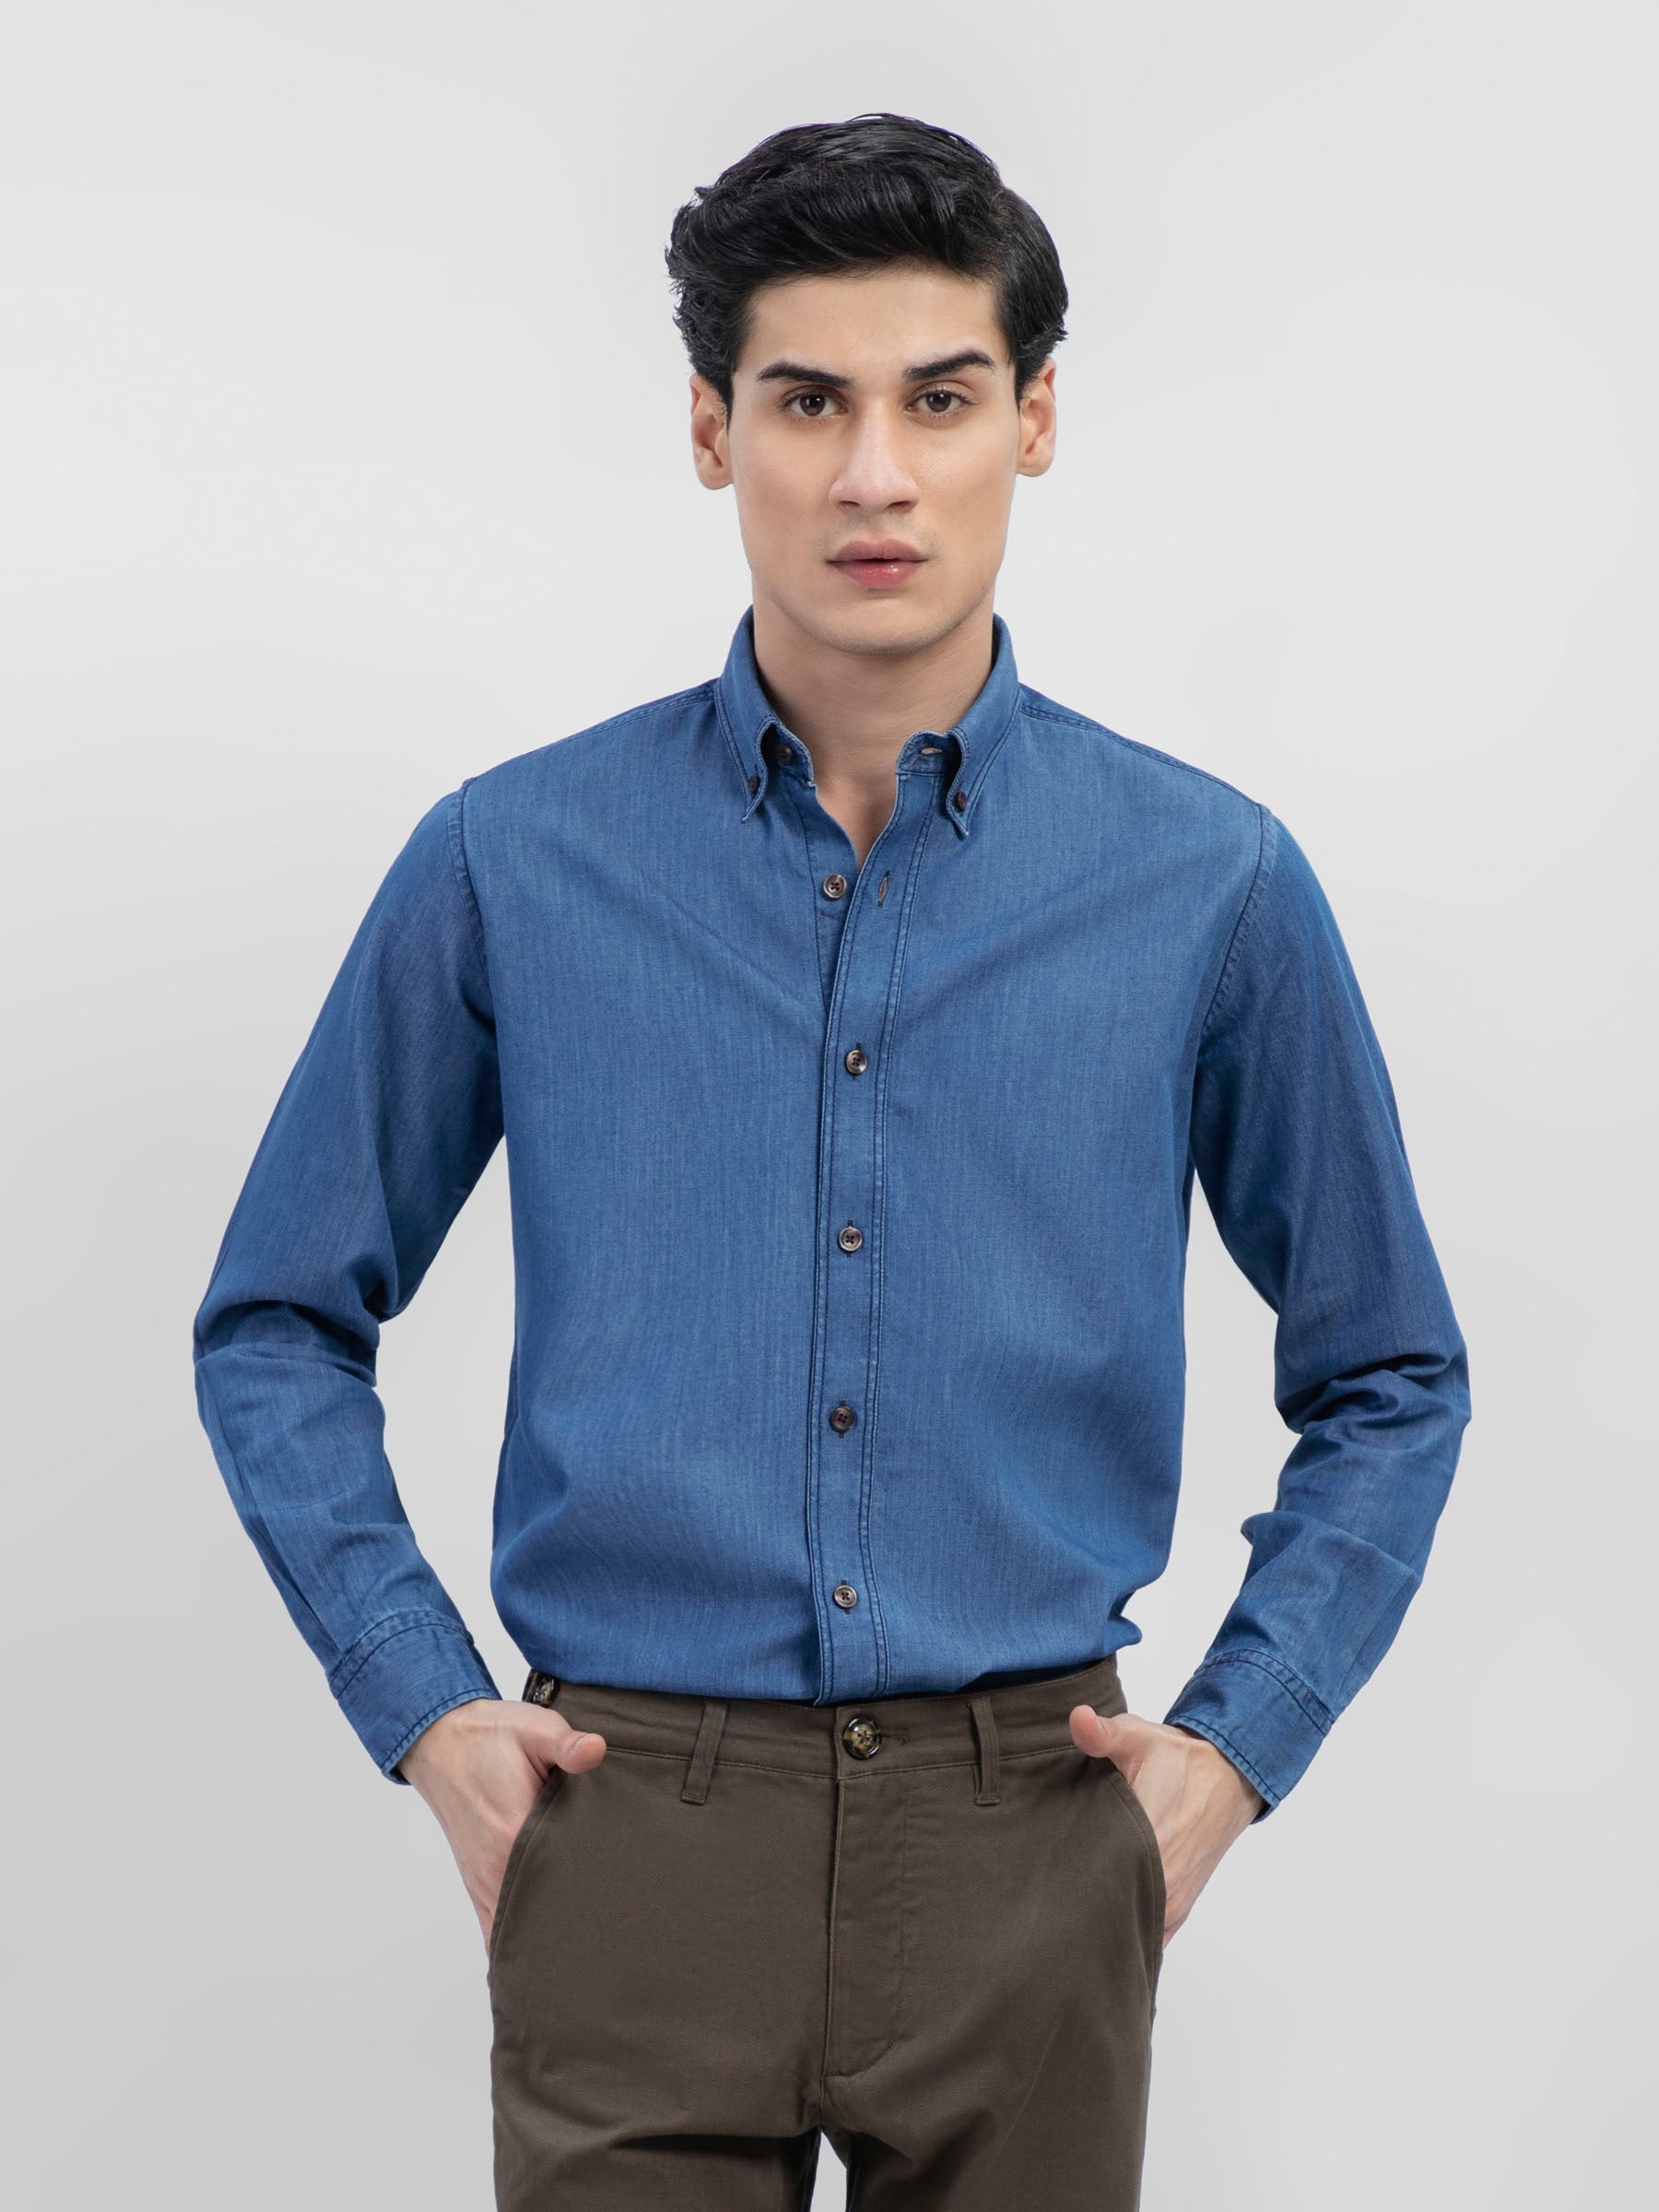 Buy Long sleeve jean shirts In Pakistan Long sleeve jean shirts Price